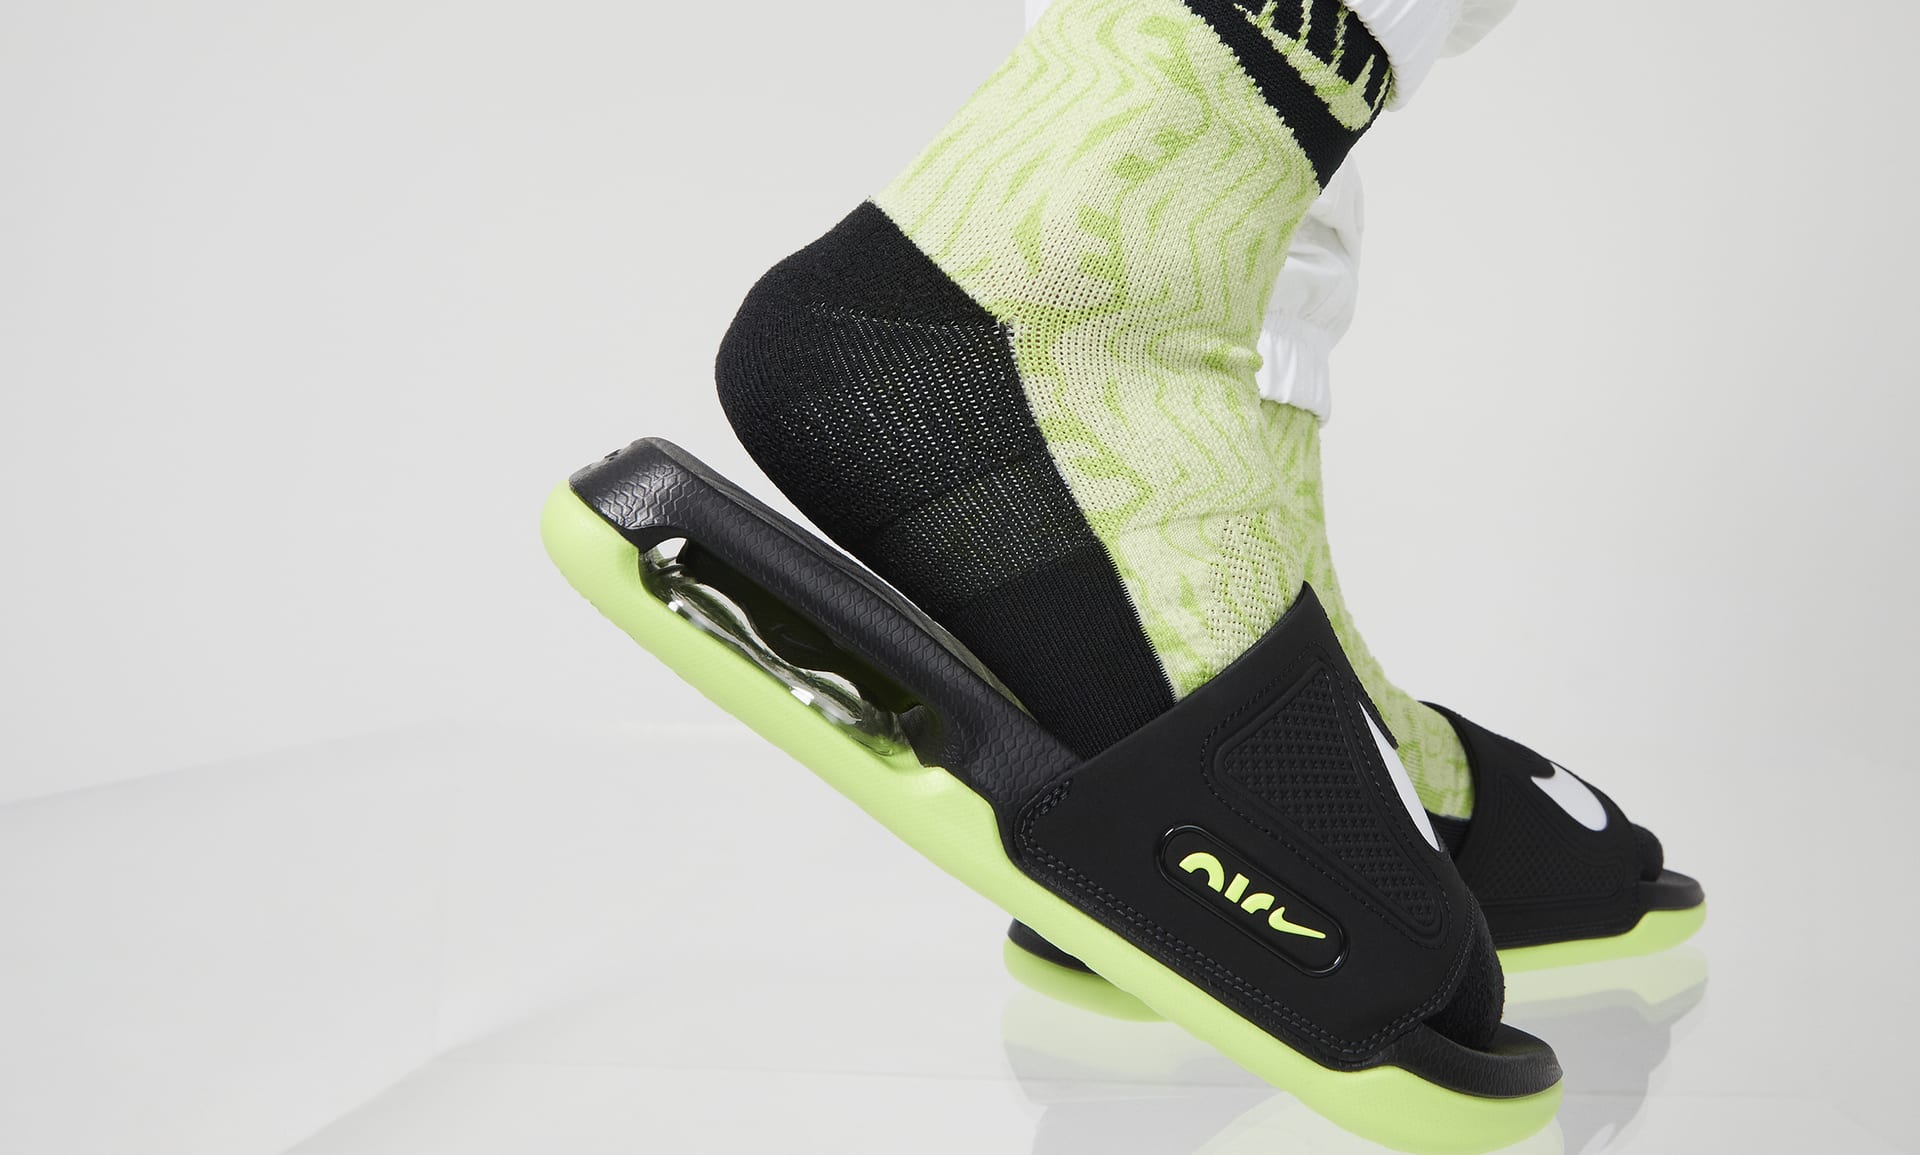 Nike Air Max Cirro Men's Slides. Nike.com